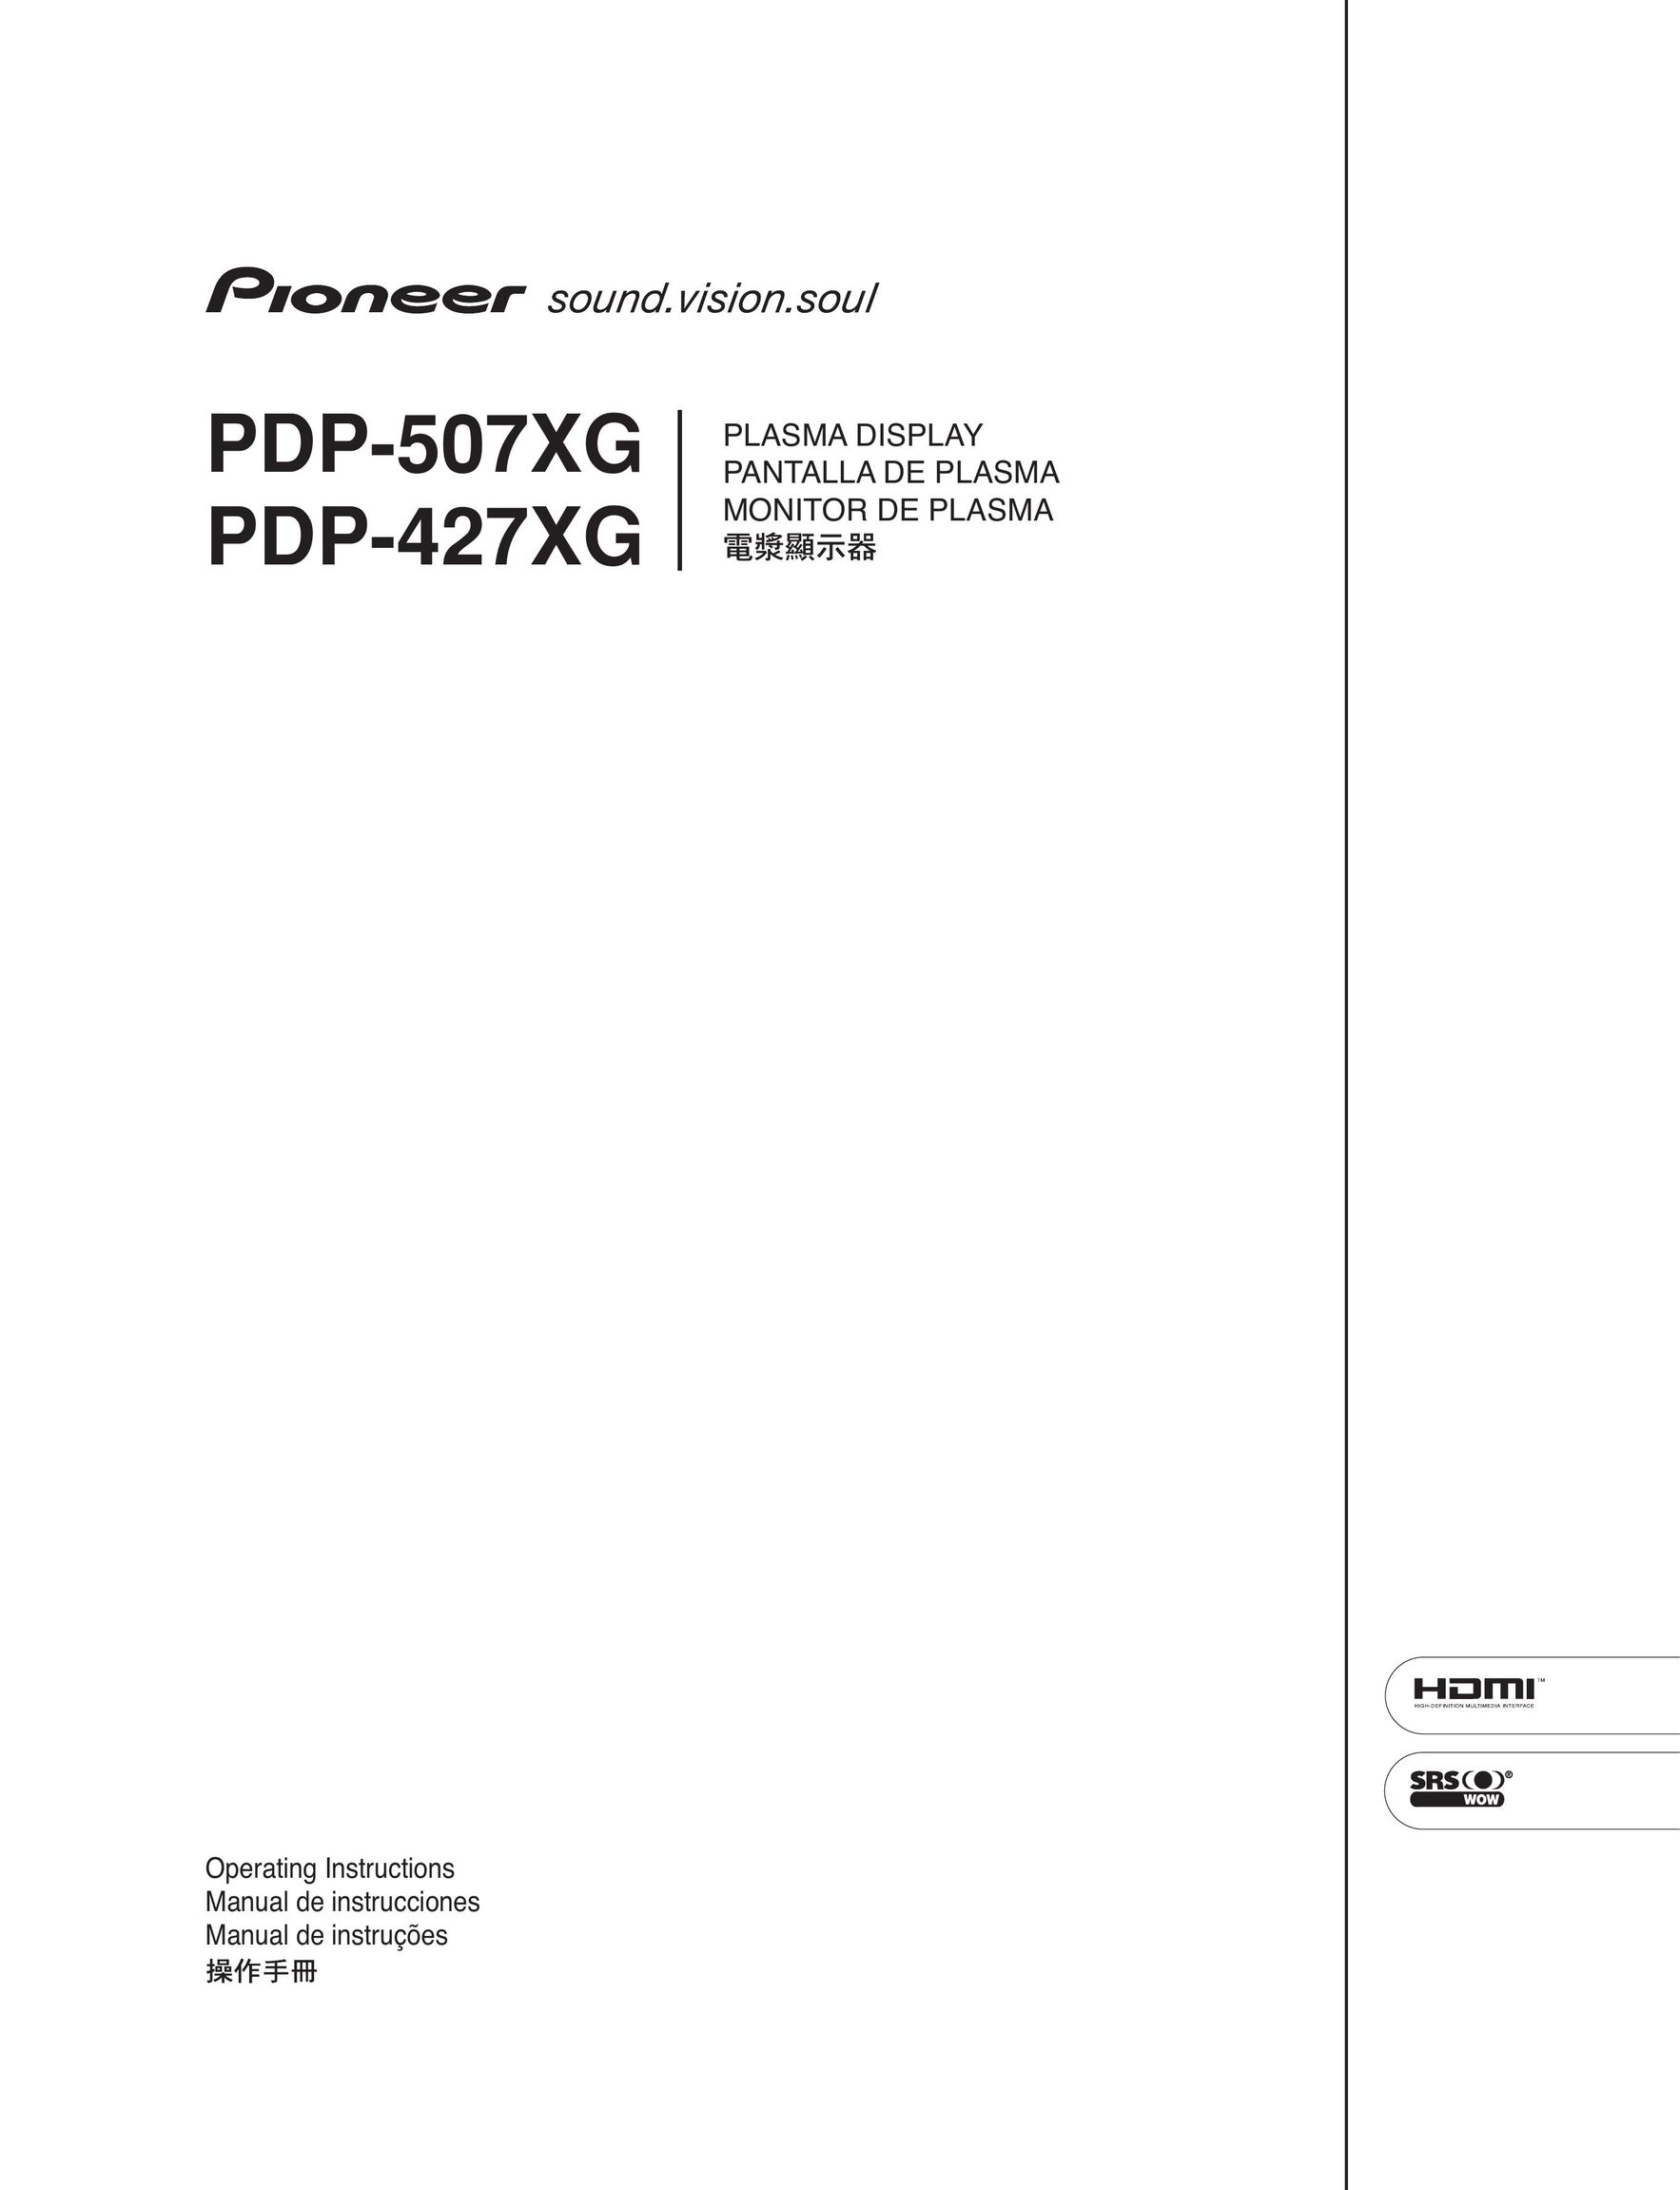 Pioneer PDP-427XG Flat Panel Television User Manual